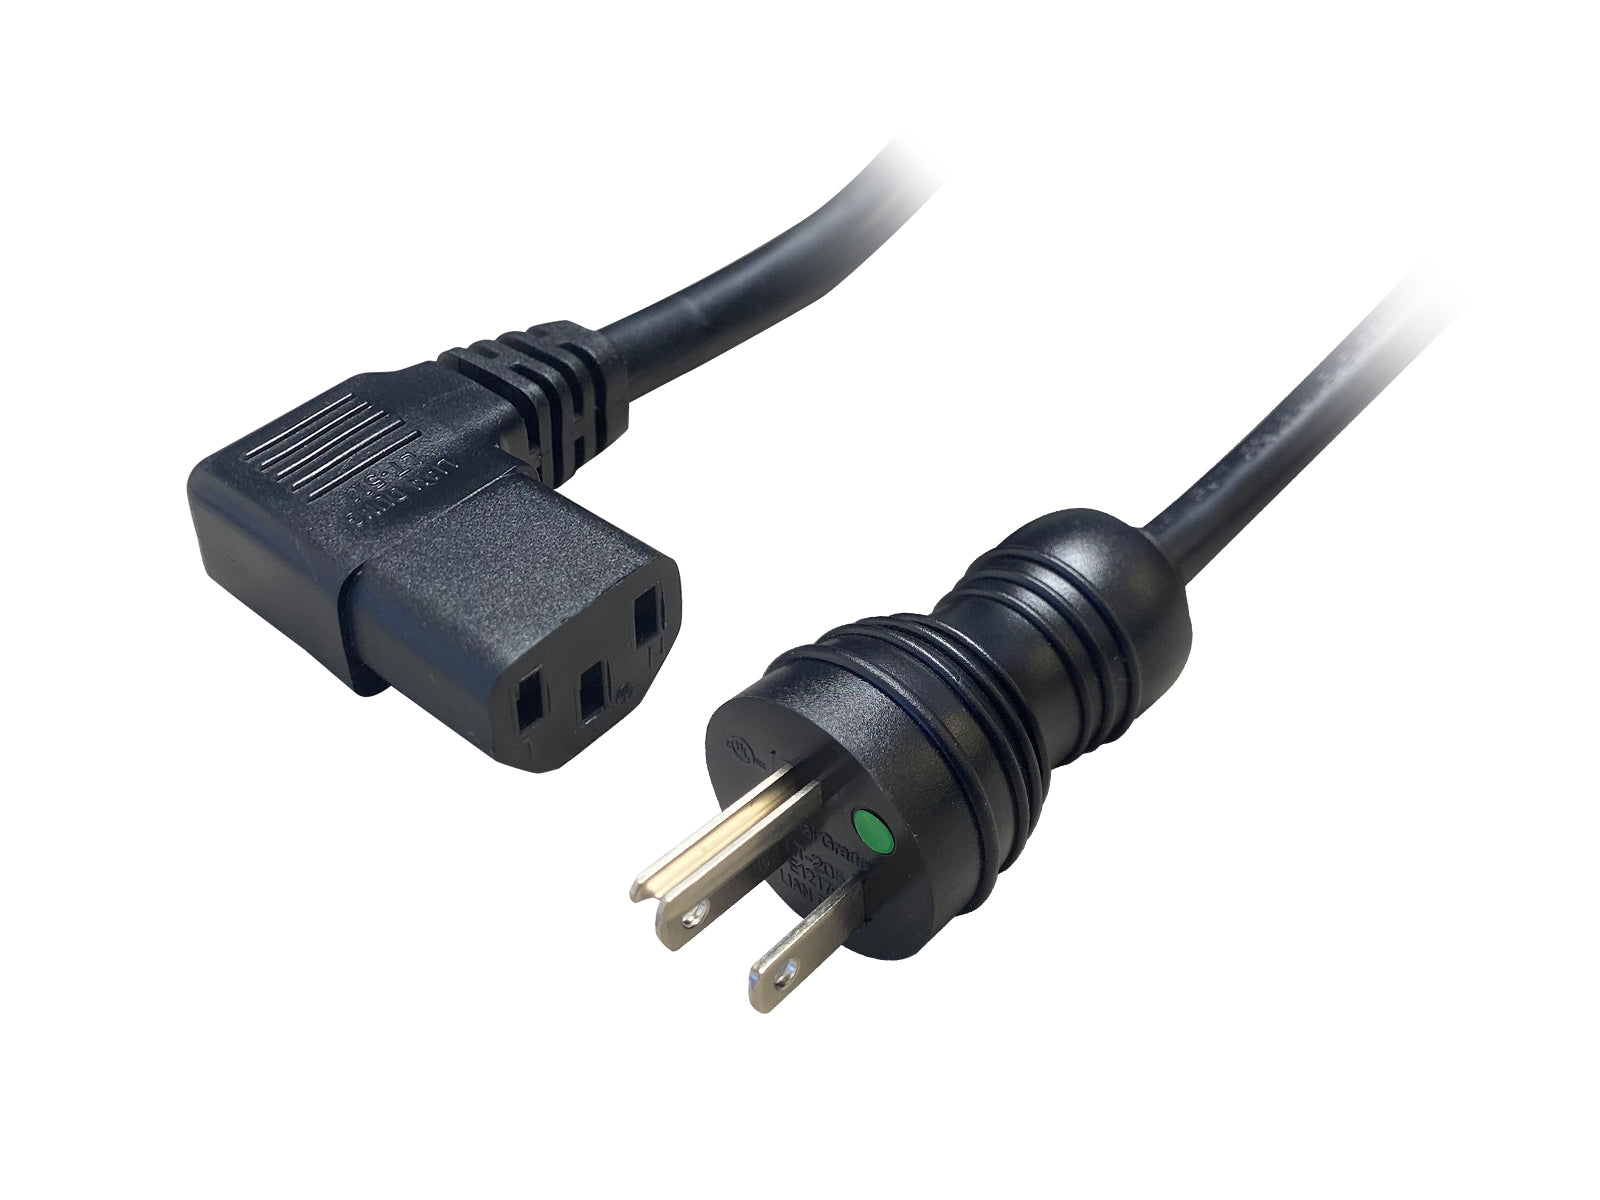 Cables de alimentación Hologic de 15 pies. (CBL01581) Monitores.com